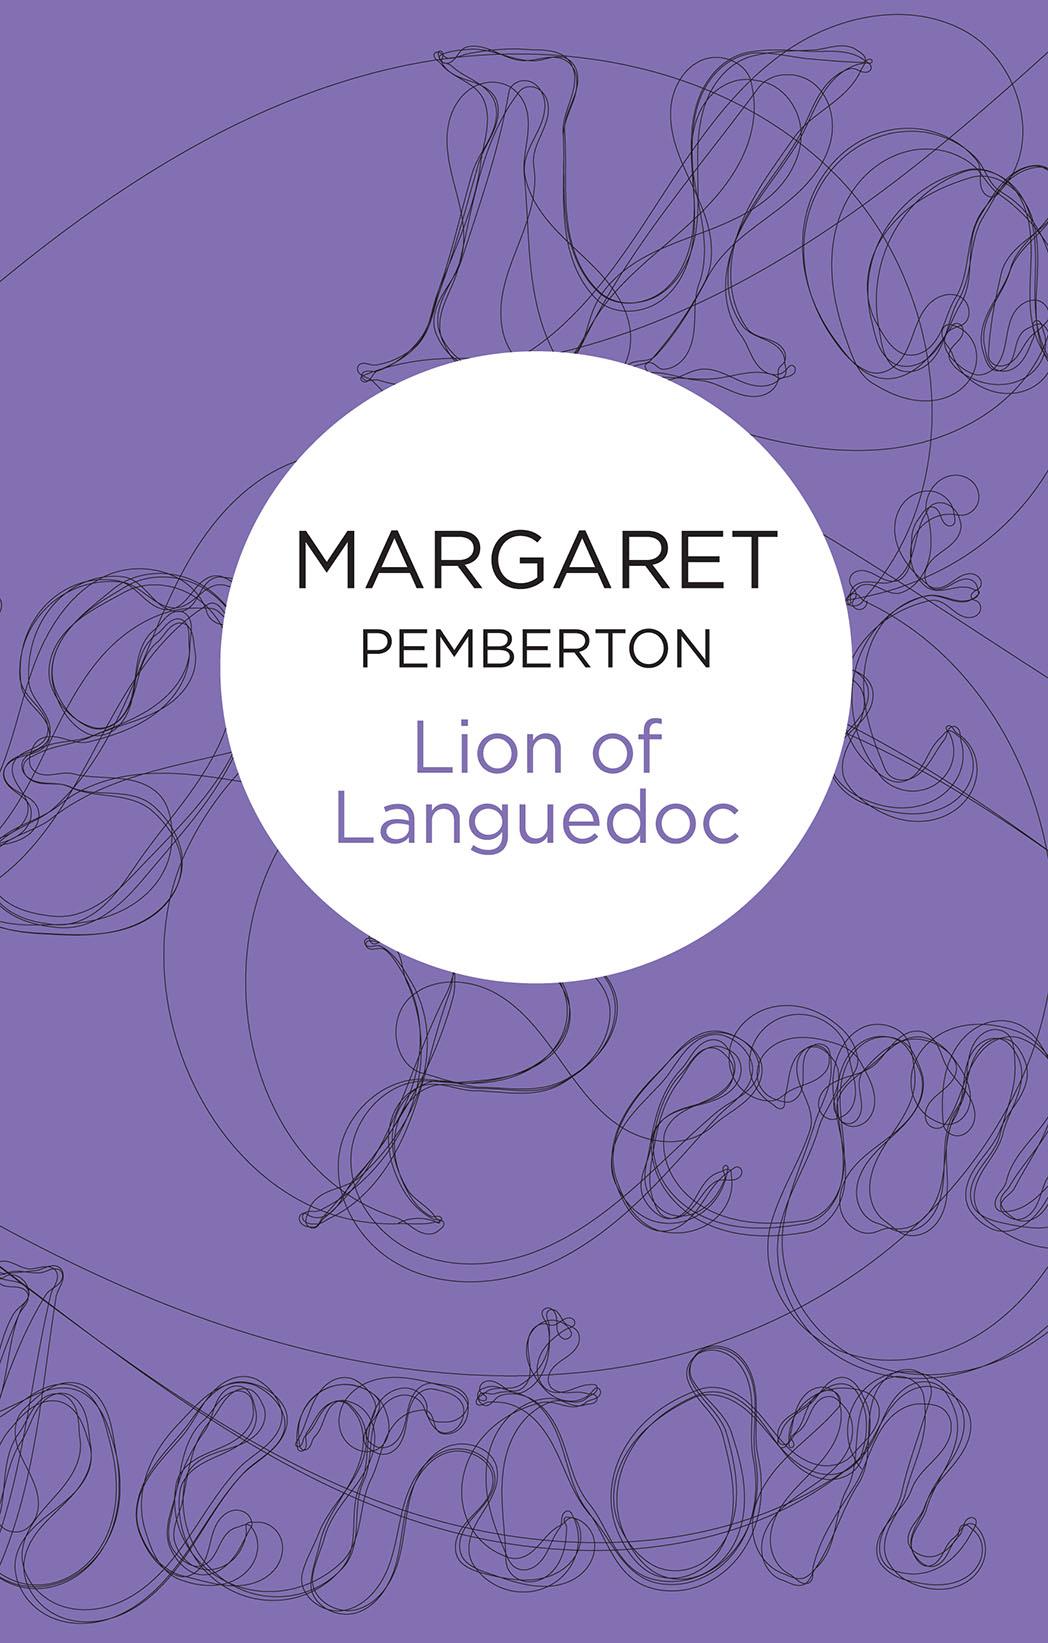 Lion of Languedoc by Margaret Pemberton